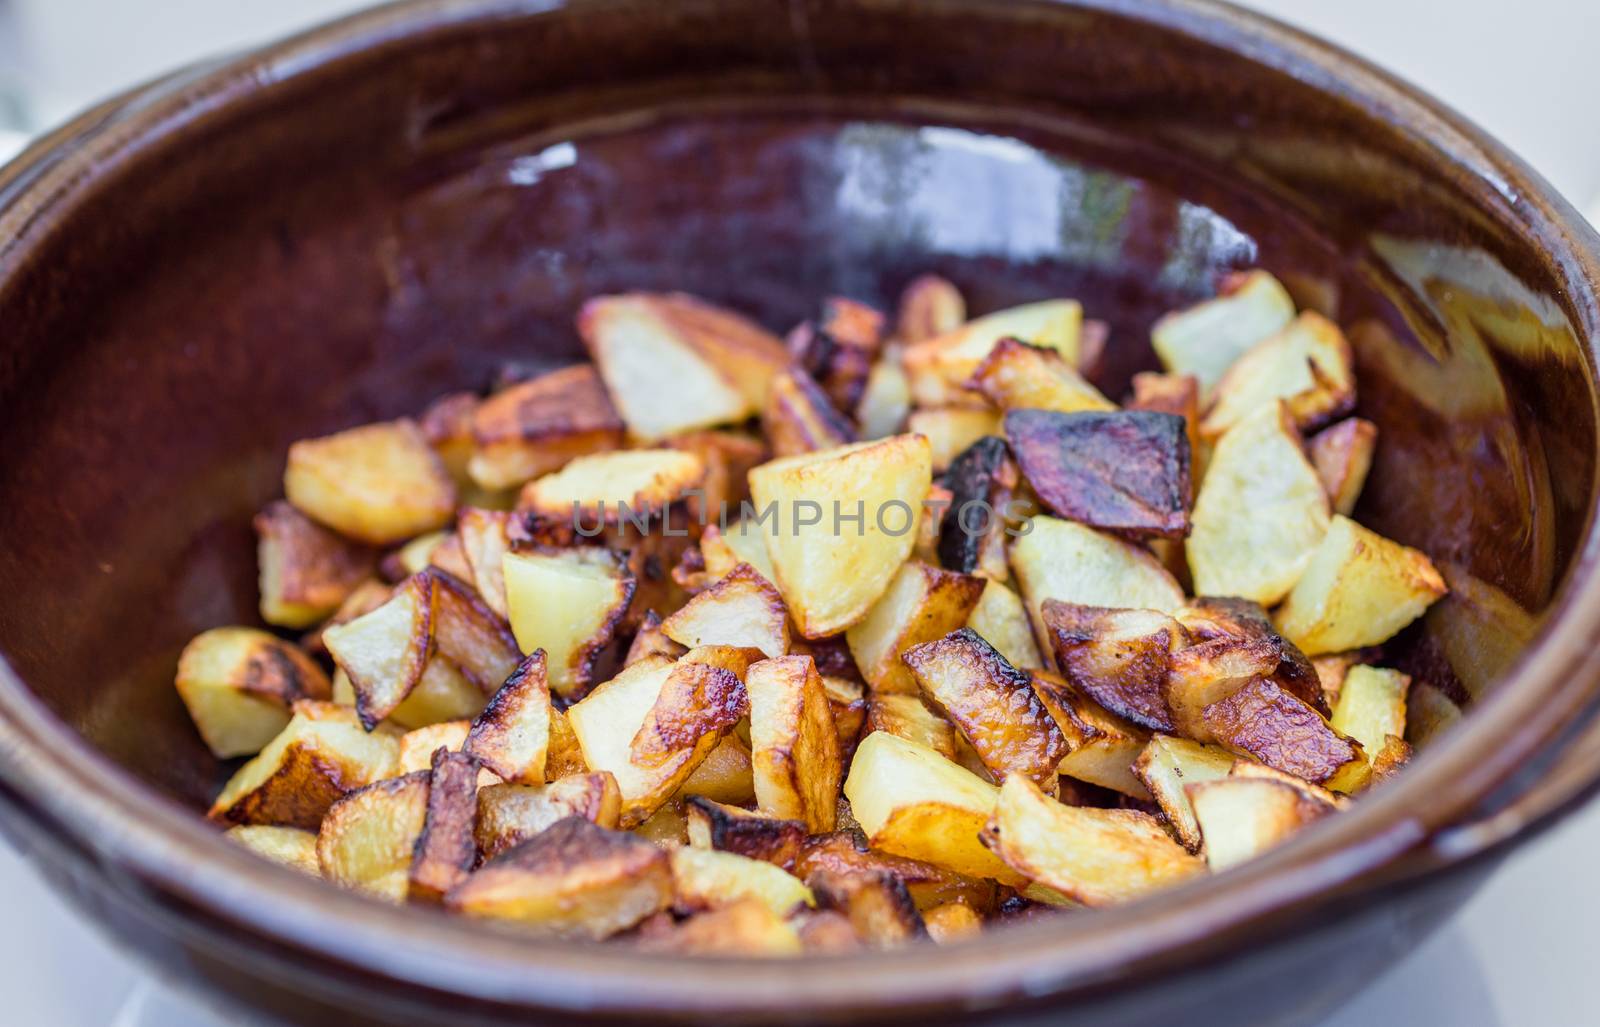 roasted potato in bowl by okskukuruza